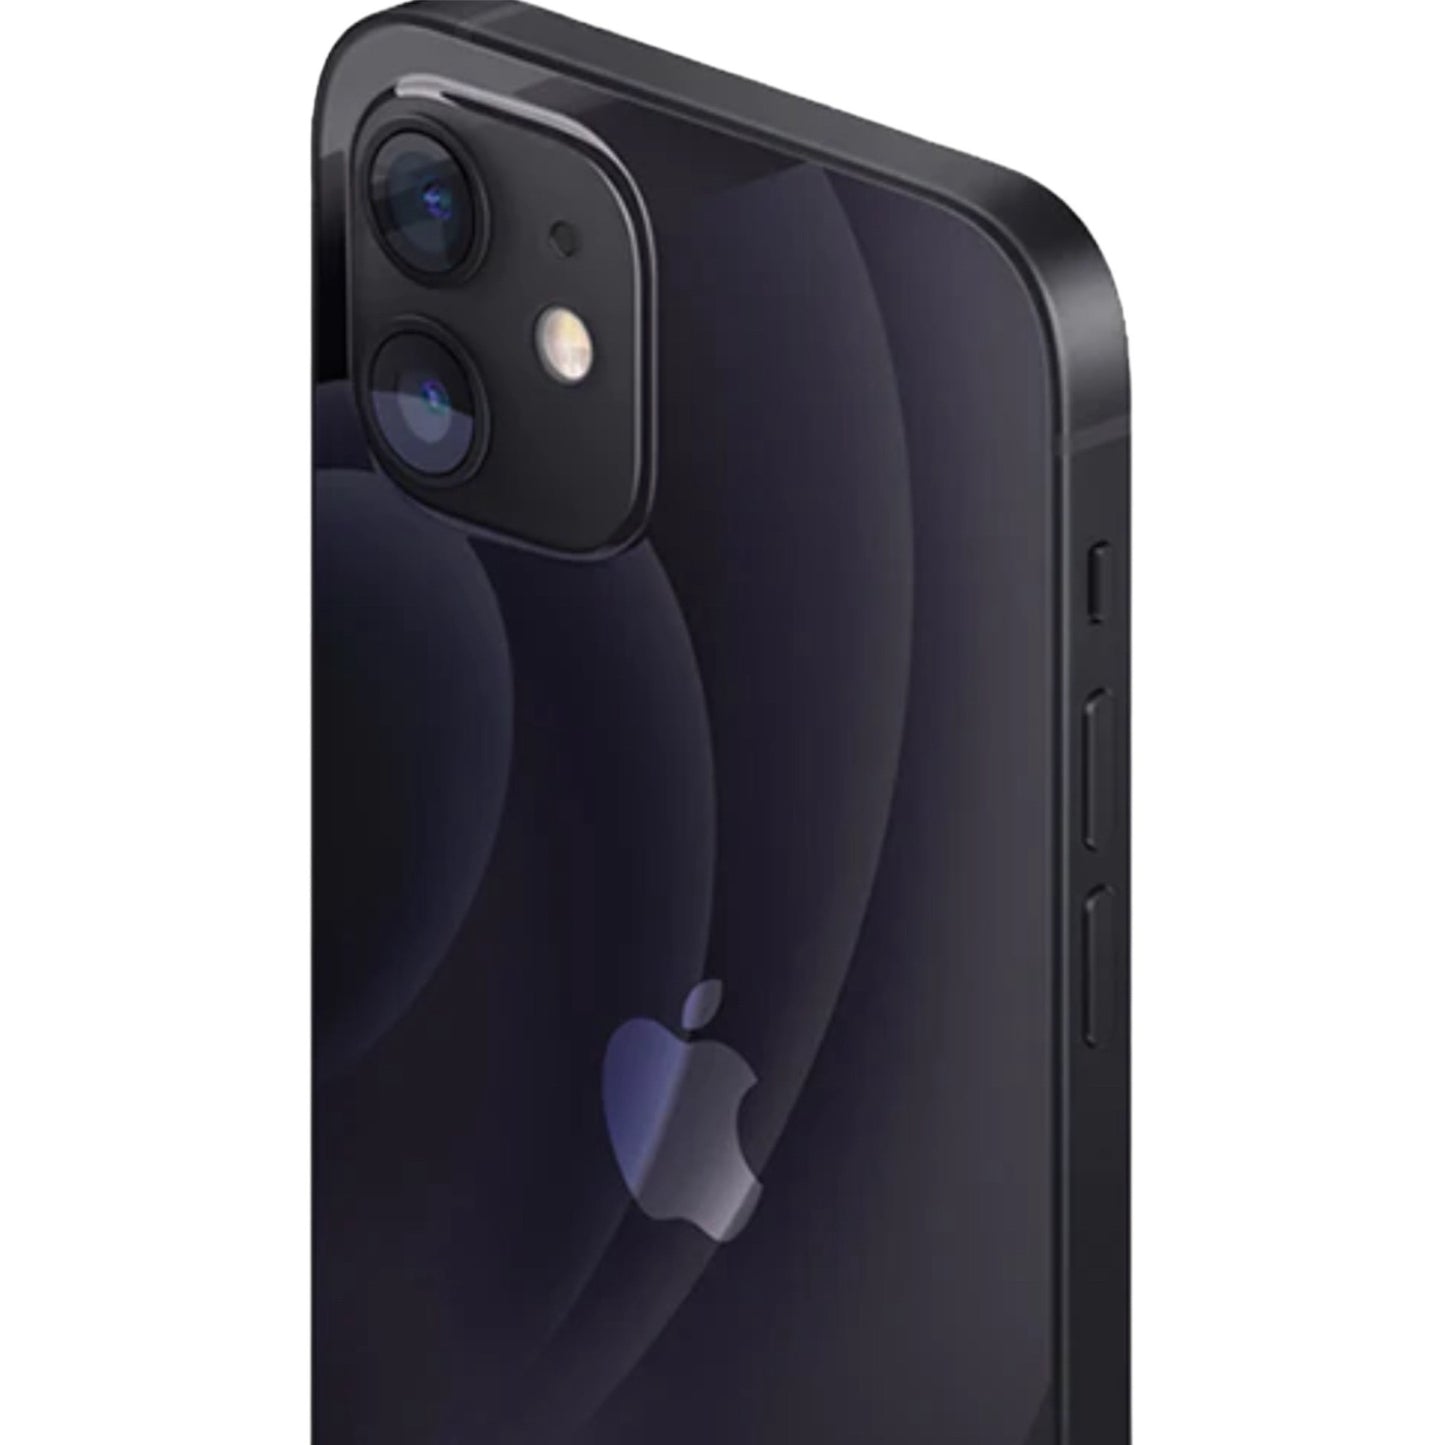 iPhone 12 Mini Black 64GB (Unlocked) Pre-Owned